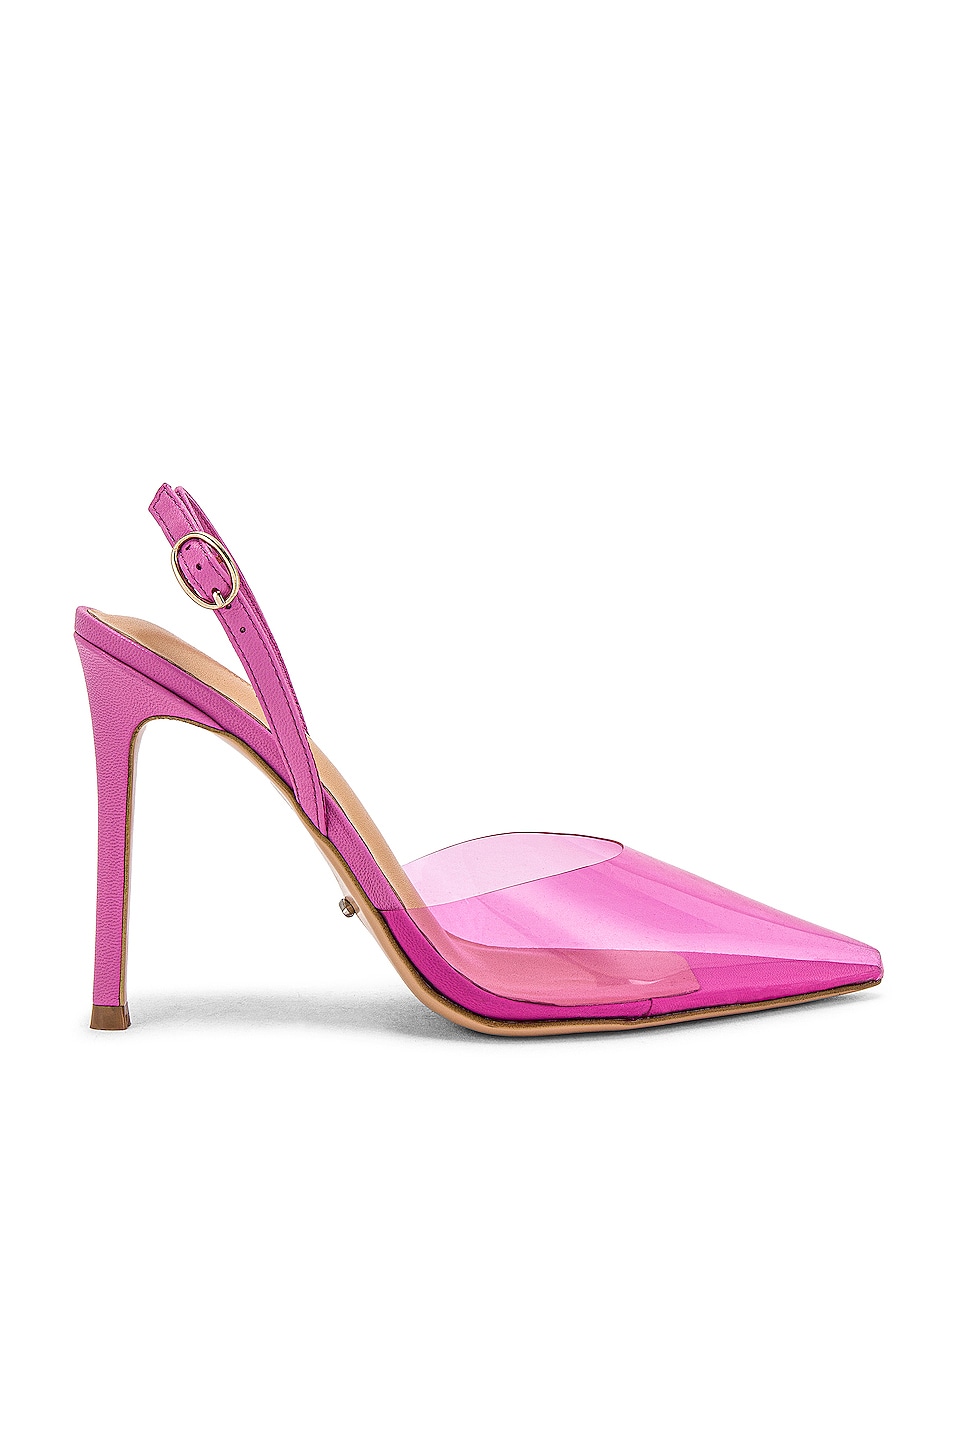 Tony Bianco Lazer Heel in Pink Vinylite | REVOLVE